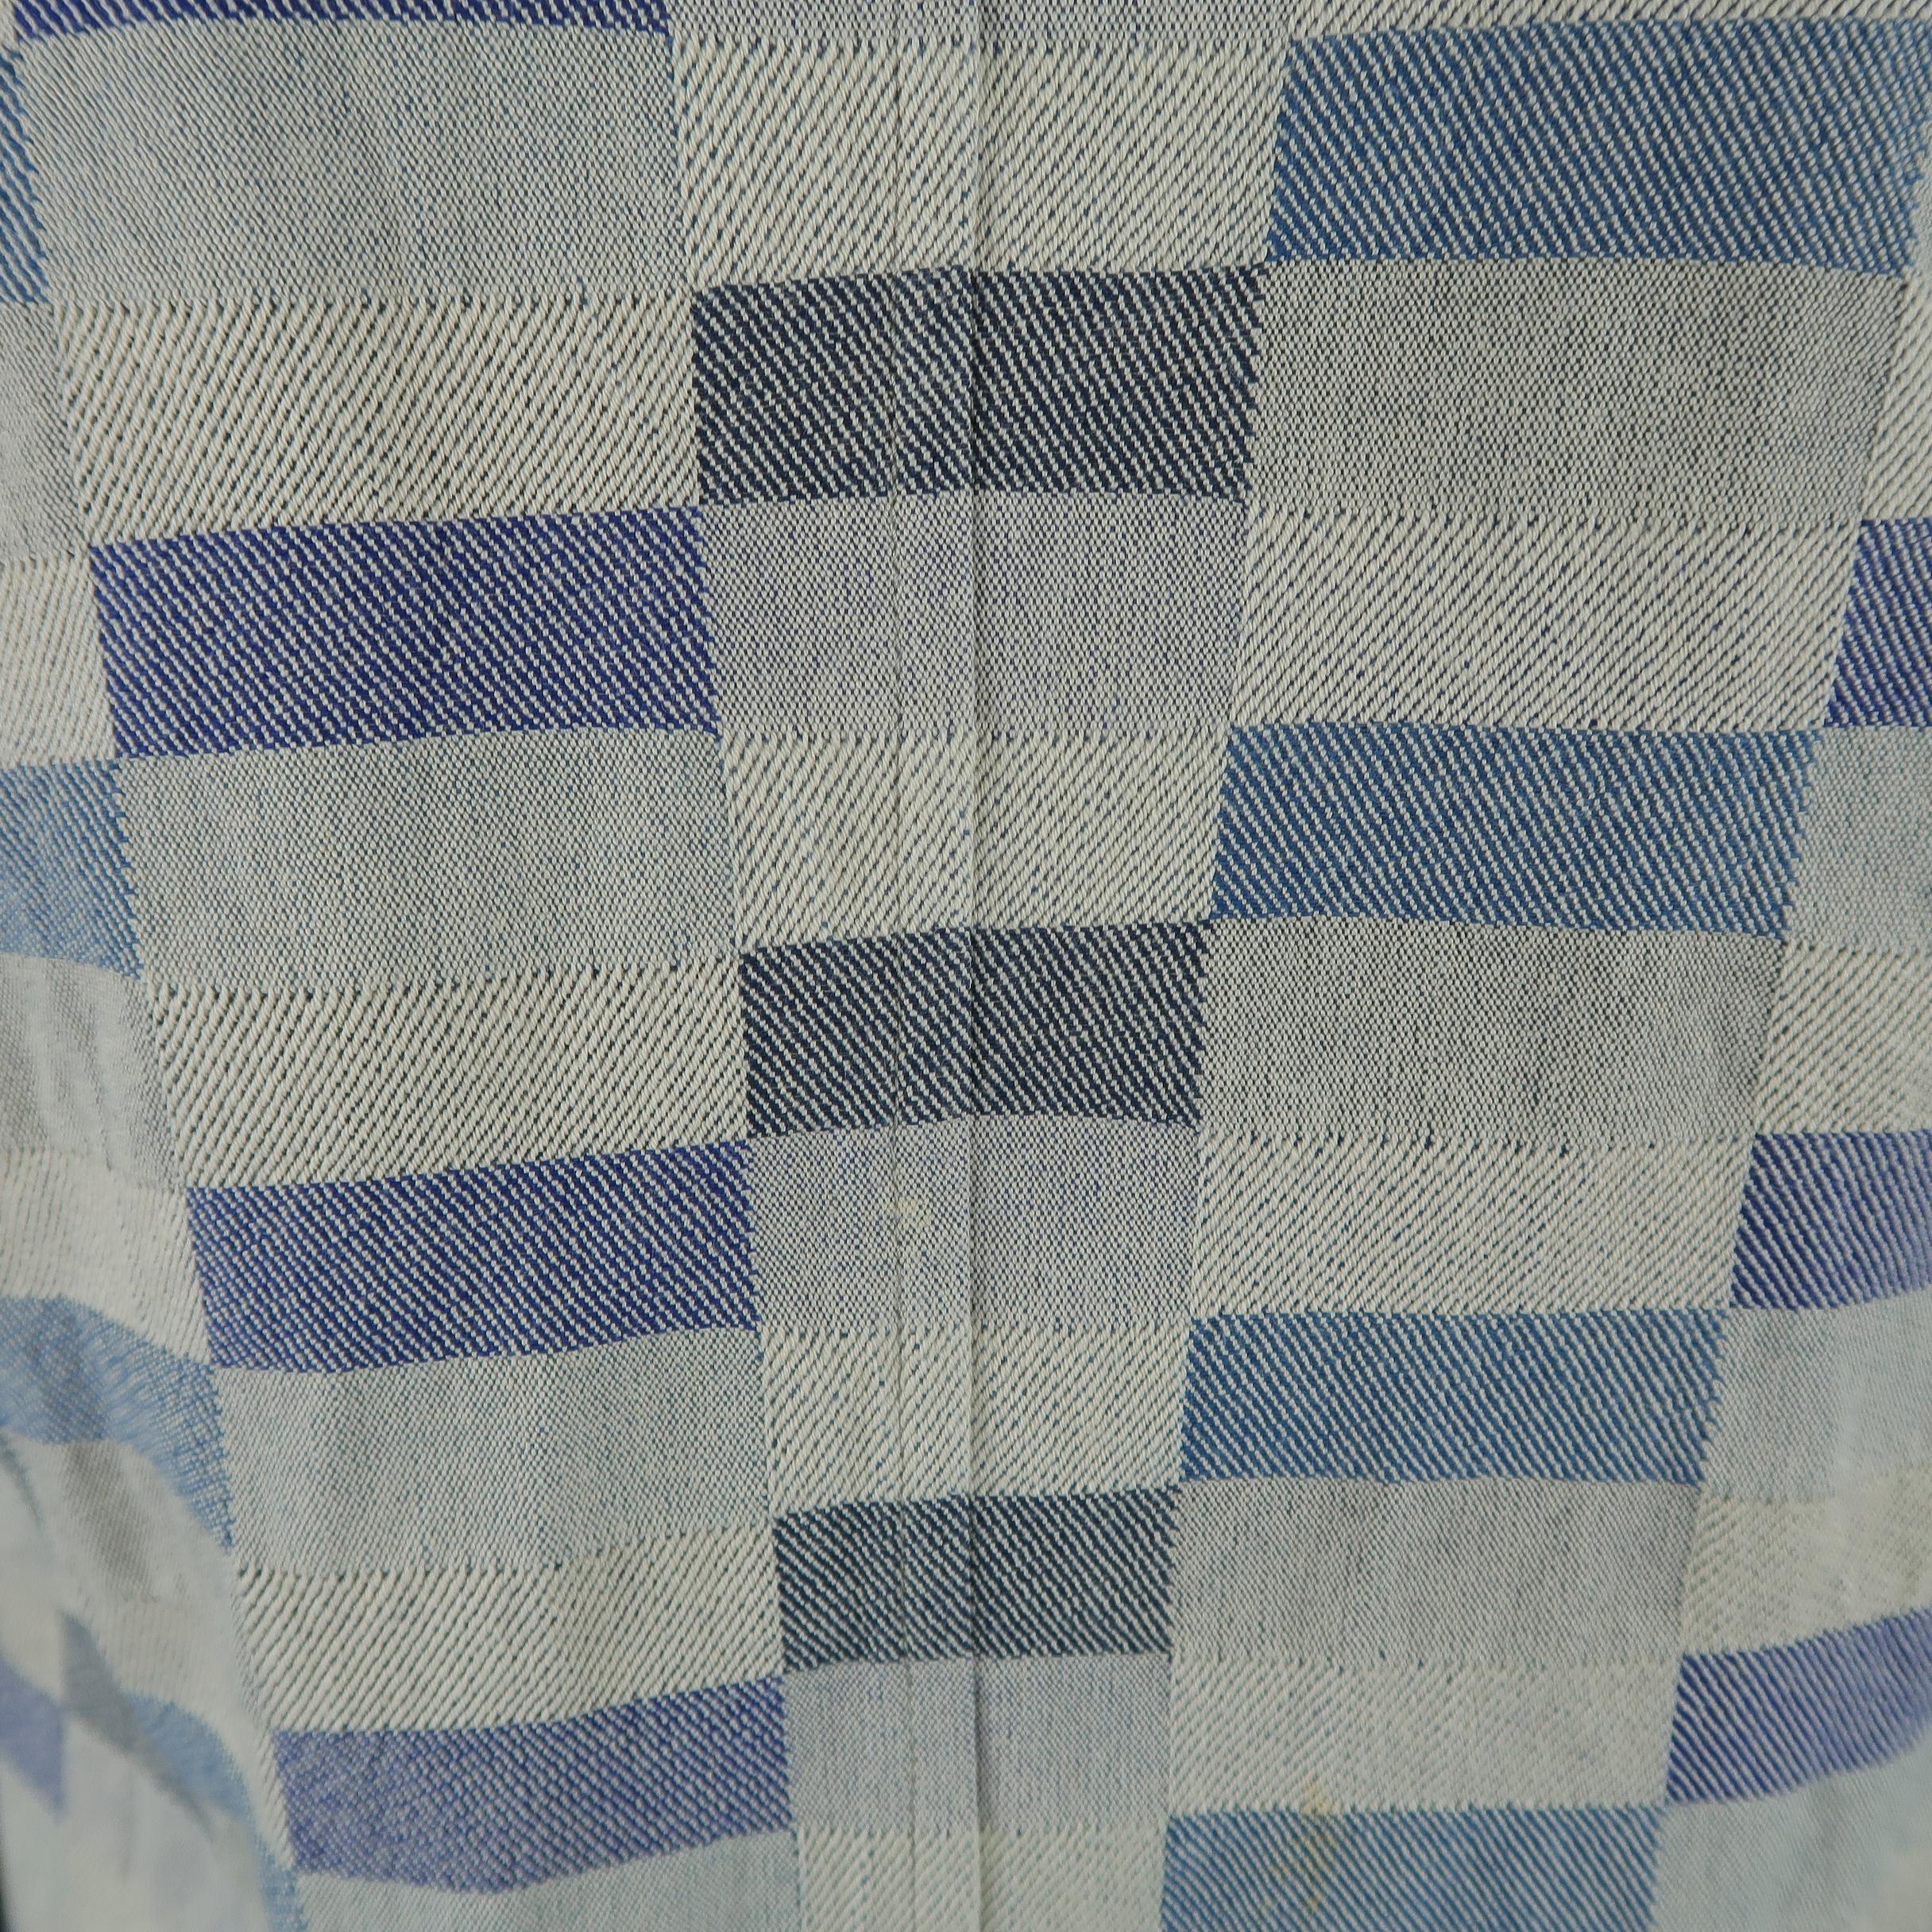 TS (S) L Grey & Navy Checkered Print Cotton Sport Coat Jacket 2